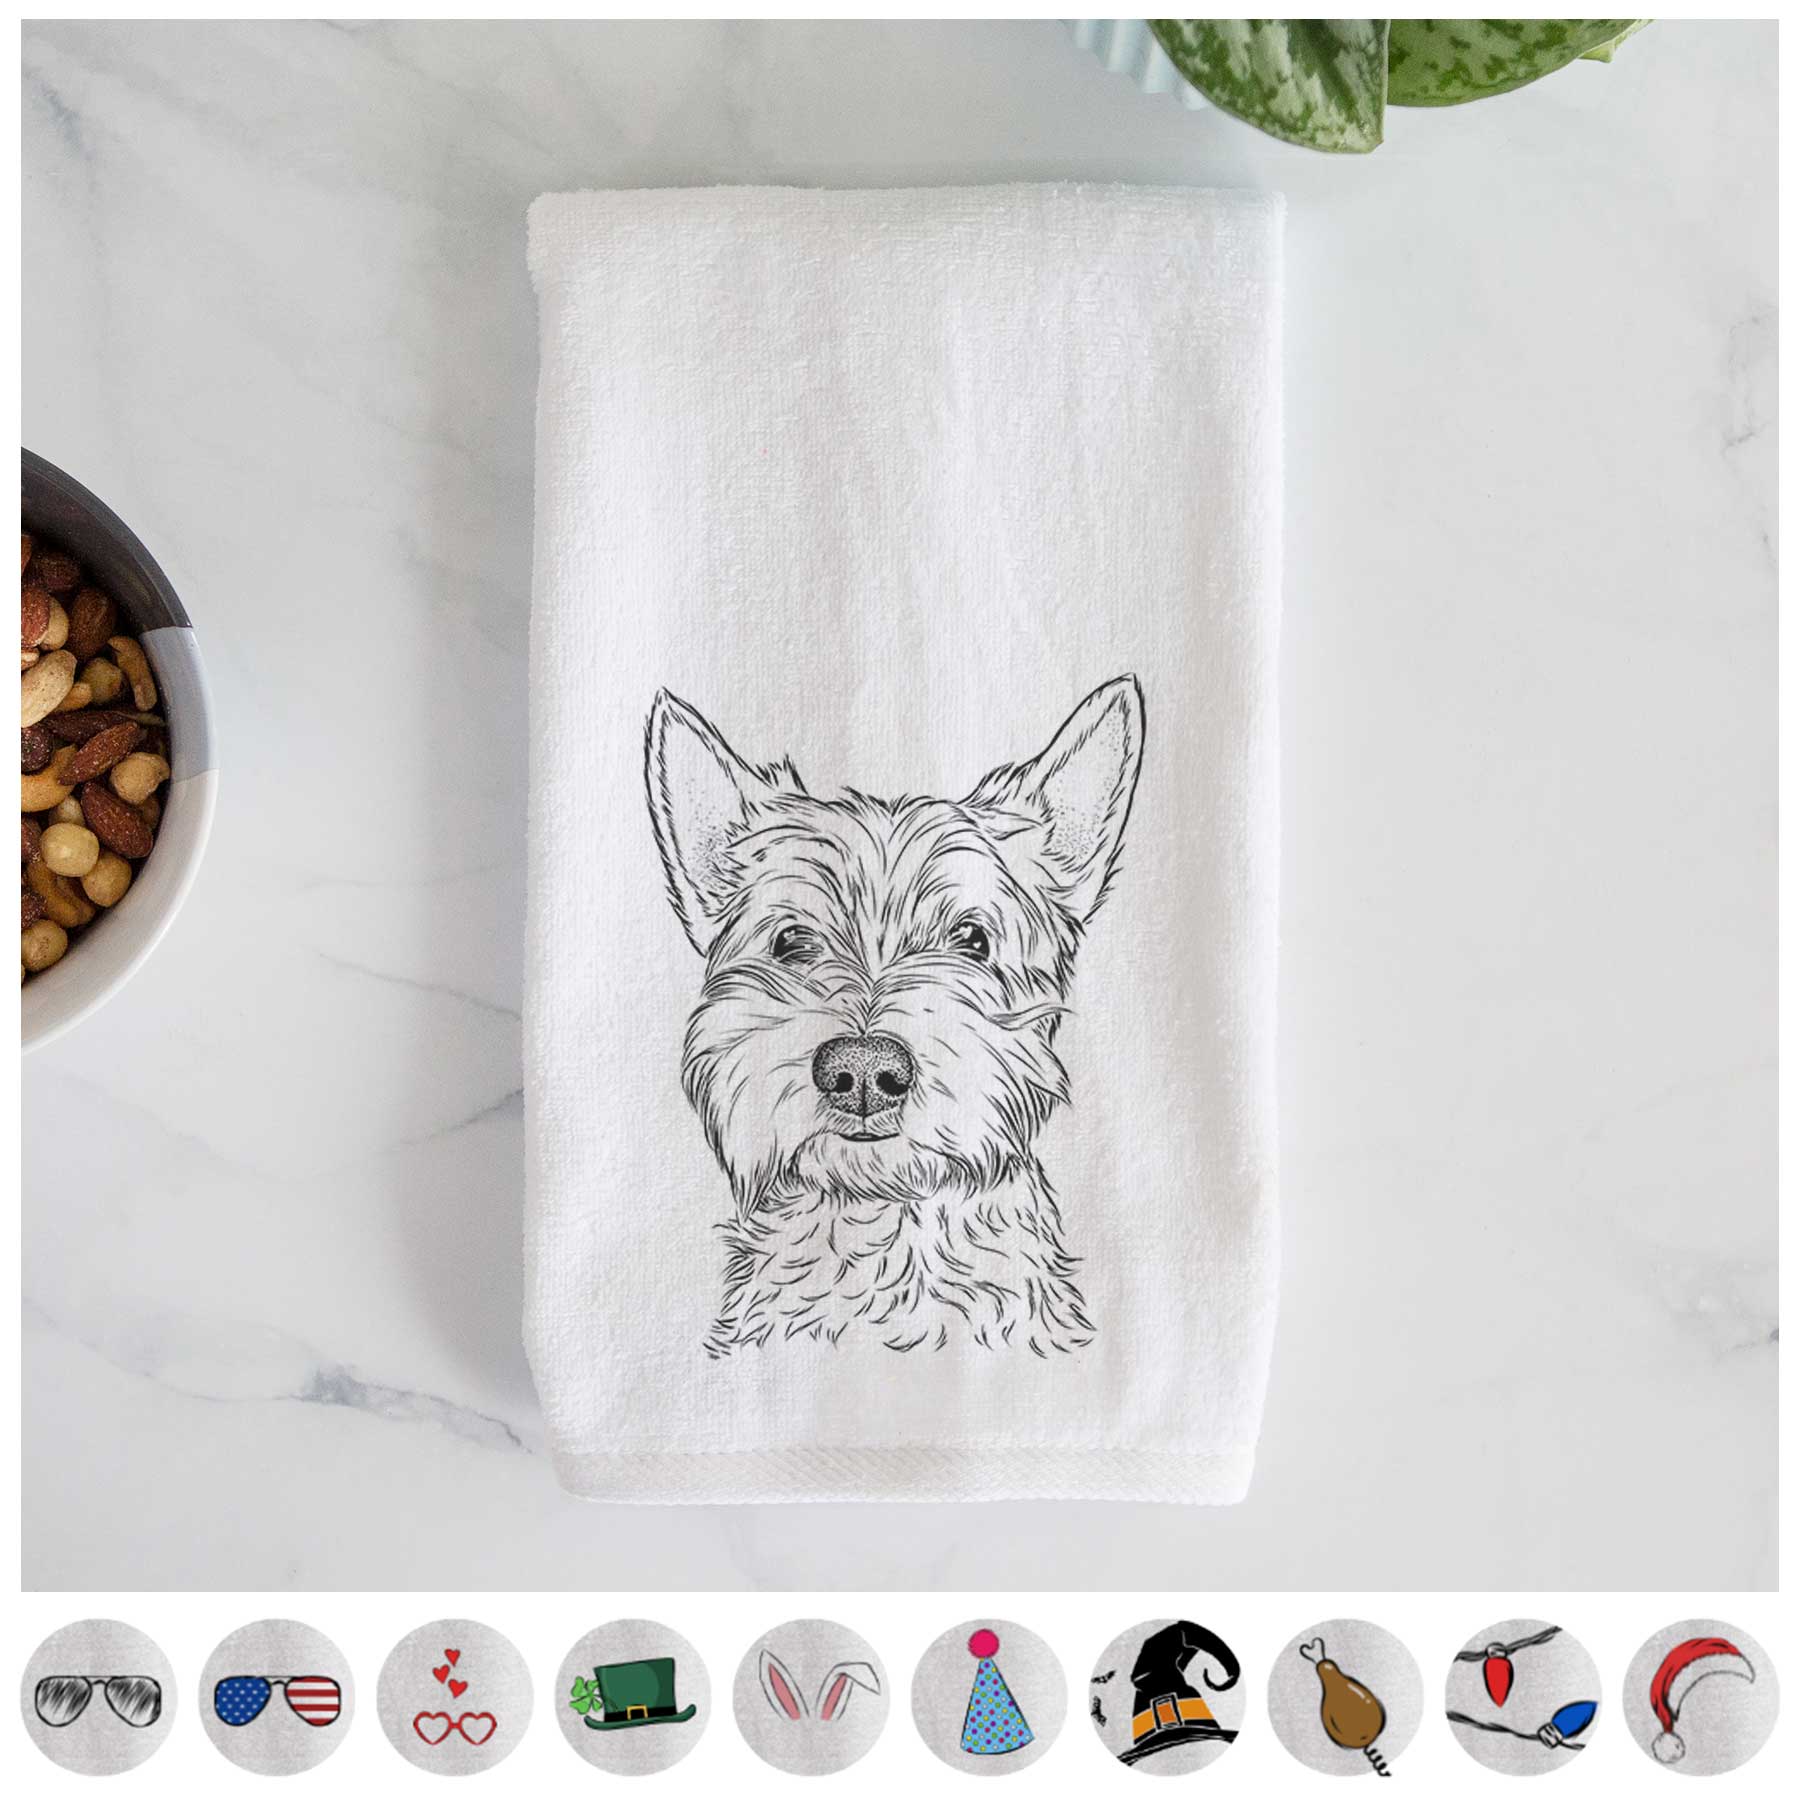 Grizel the West Highland Terrier Hand Towel